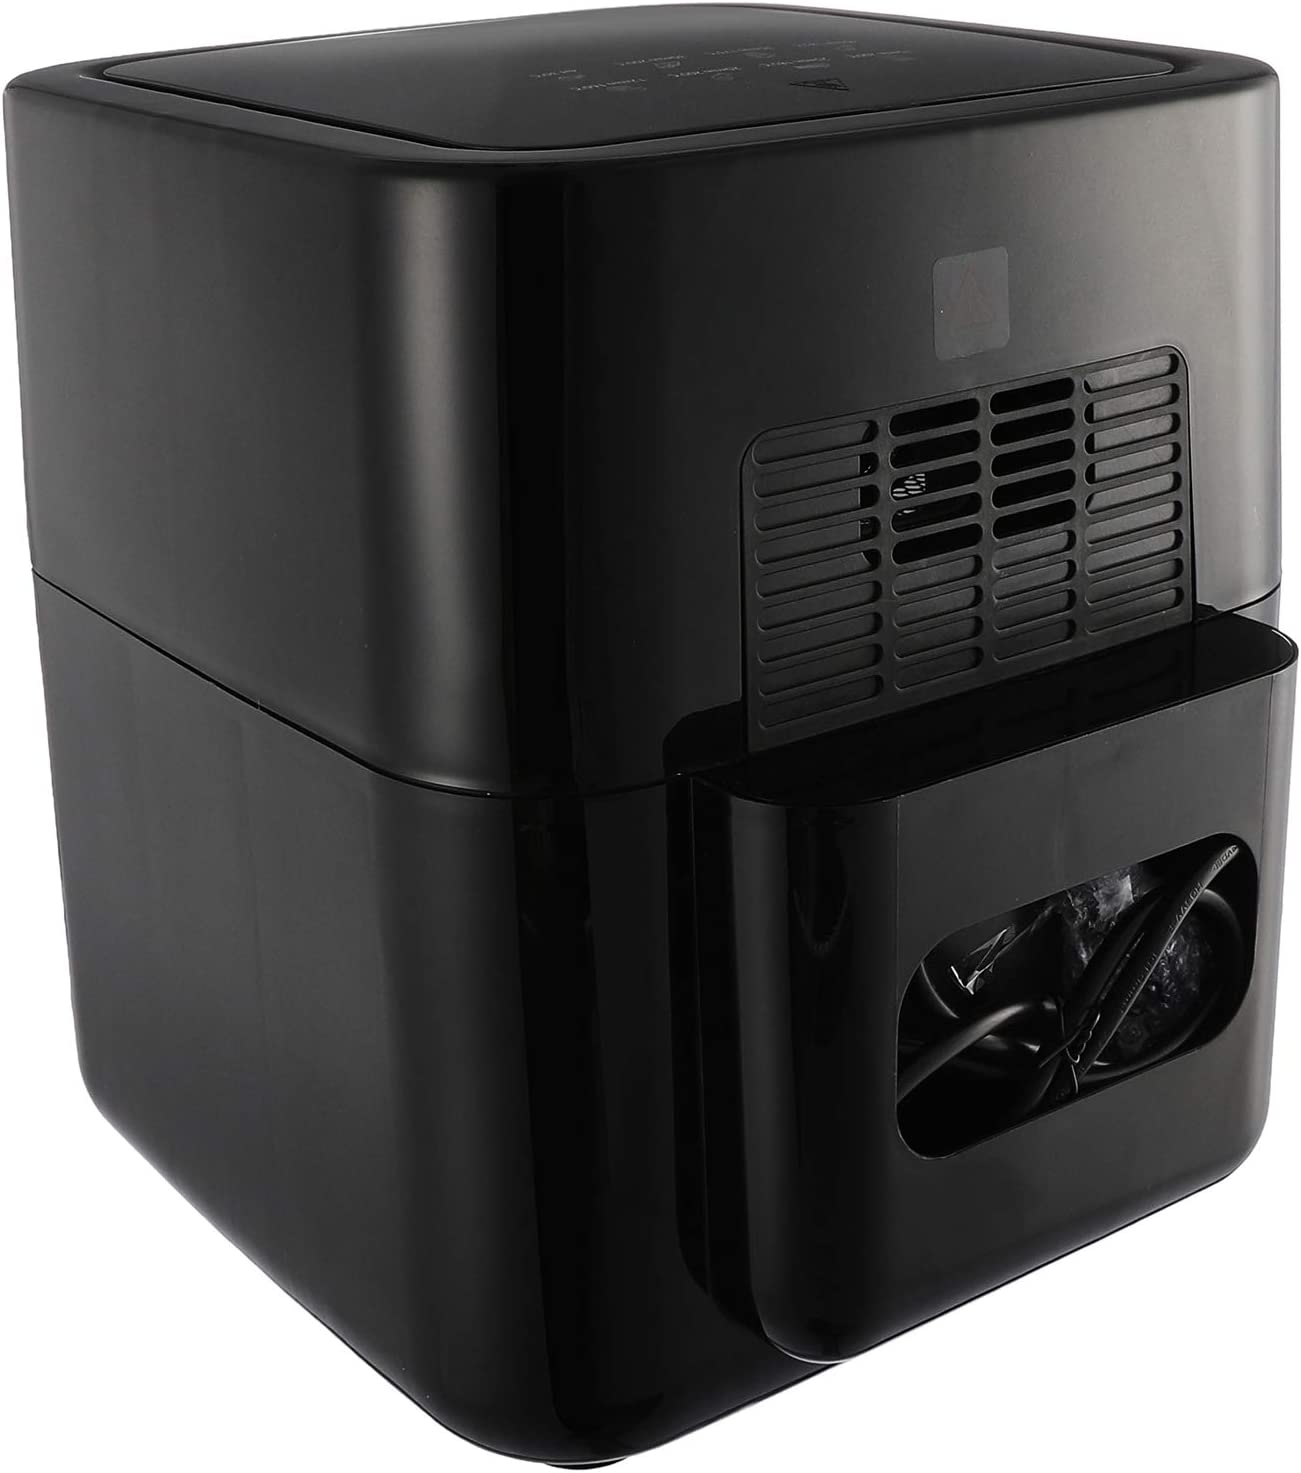 Sokany Electric Air Fryer, 1700 watt, 10 Liter, Black AF-003